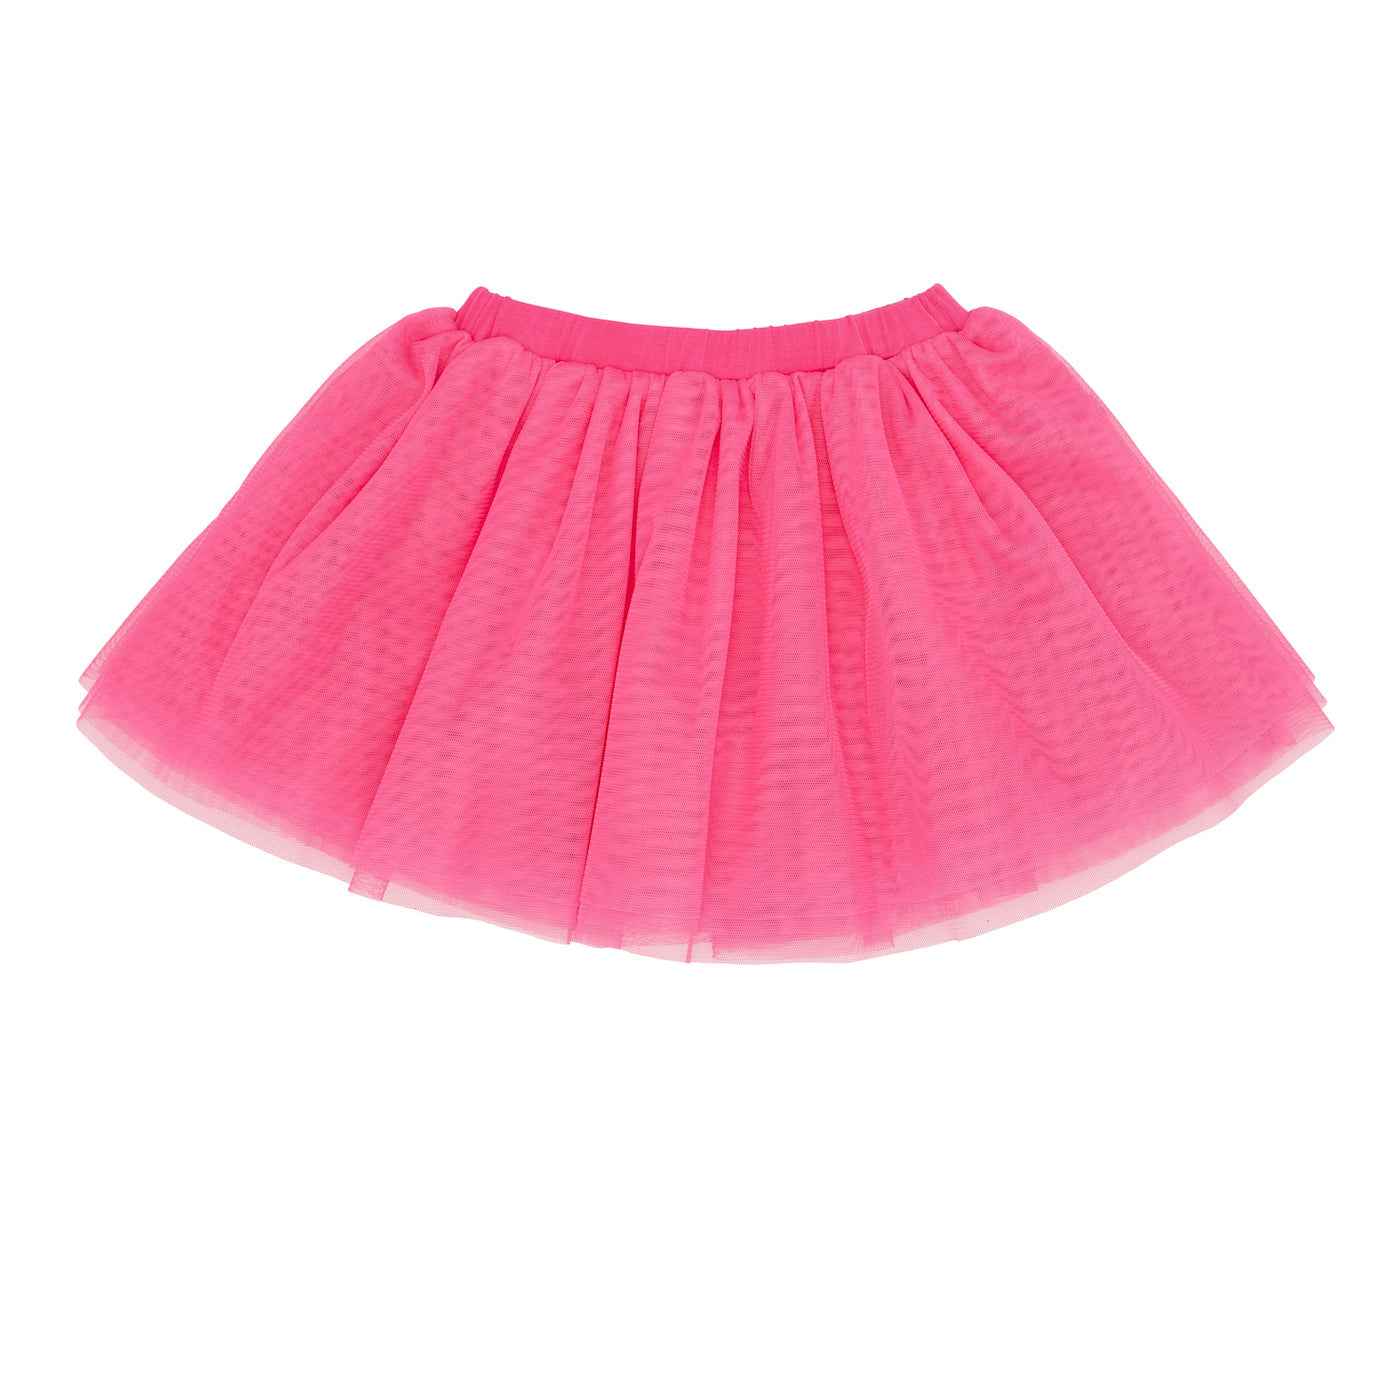 Play Skirt - Raspberry Pink Bamboo Viscose Lined Tutu